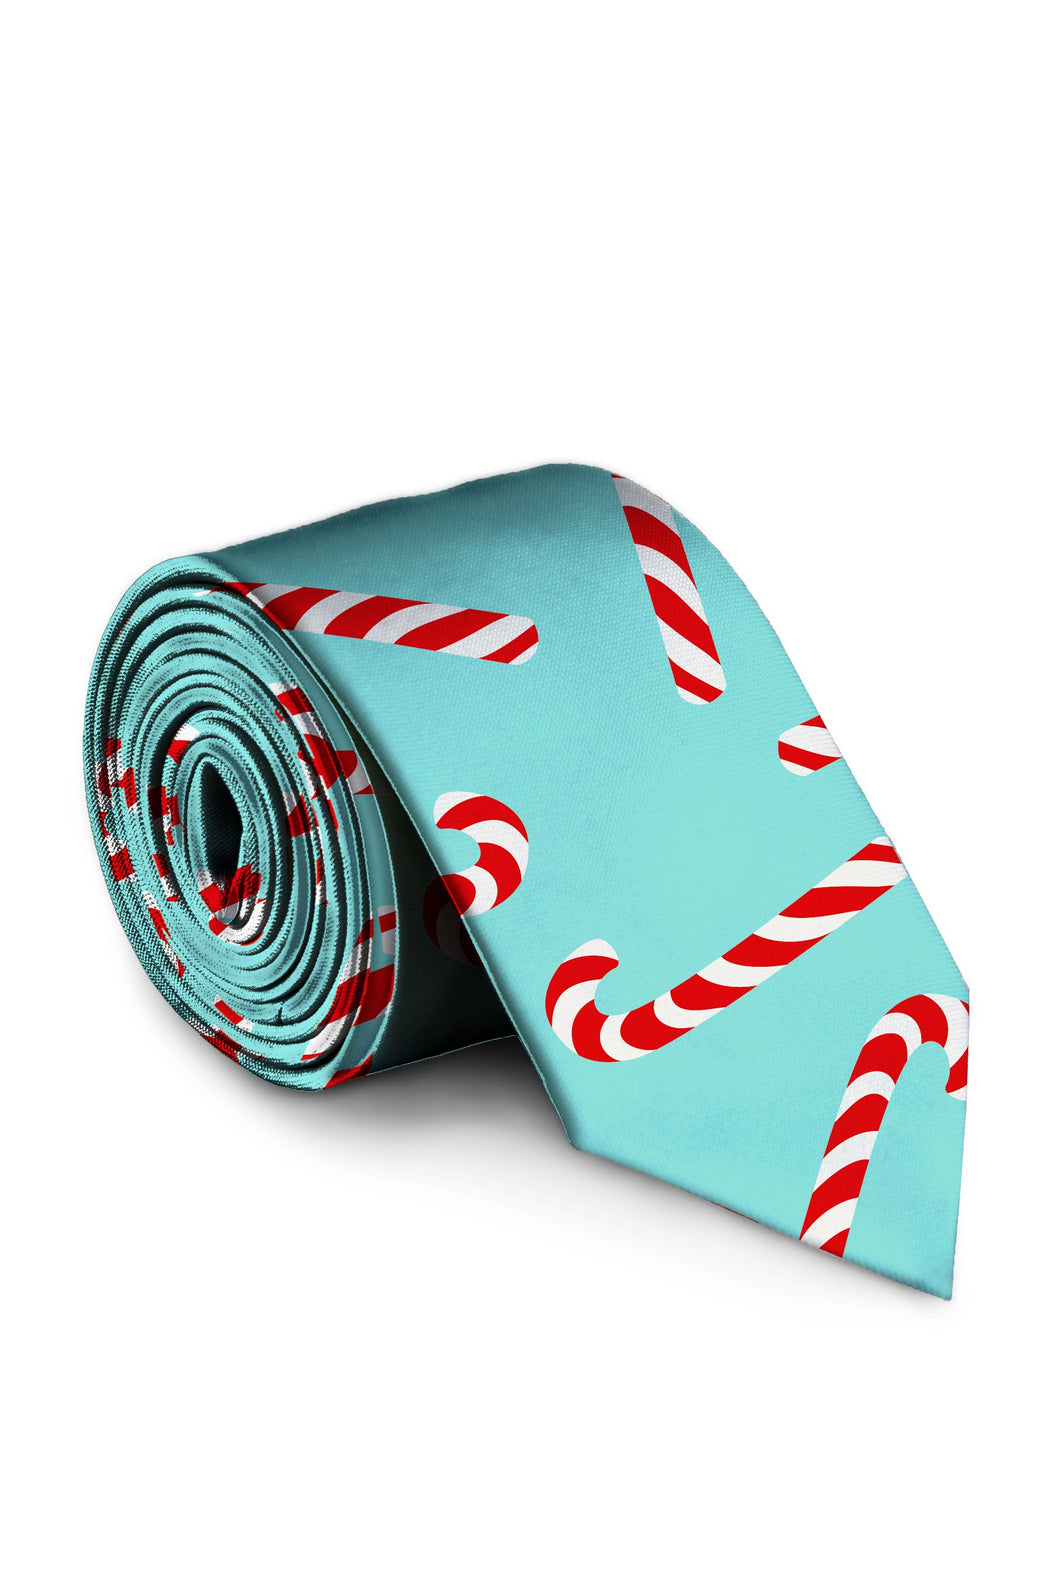 The Peppermint Pimp Canes Candy Cane Print Blue Christmas Tie